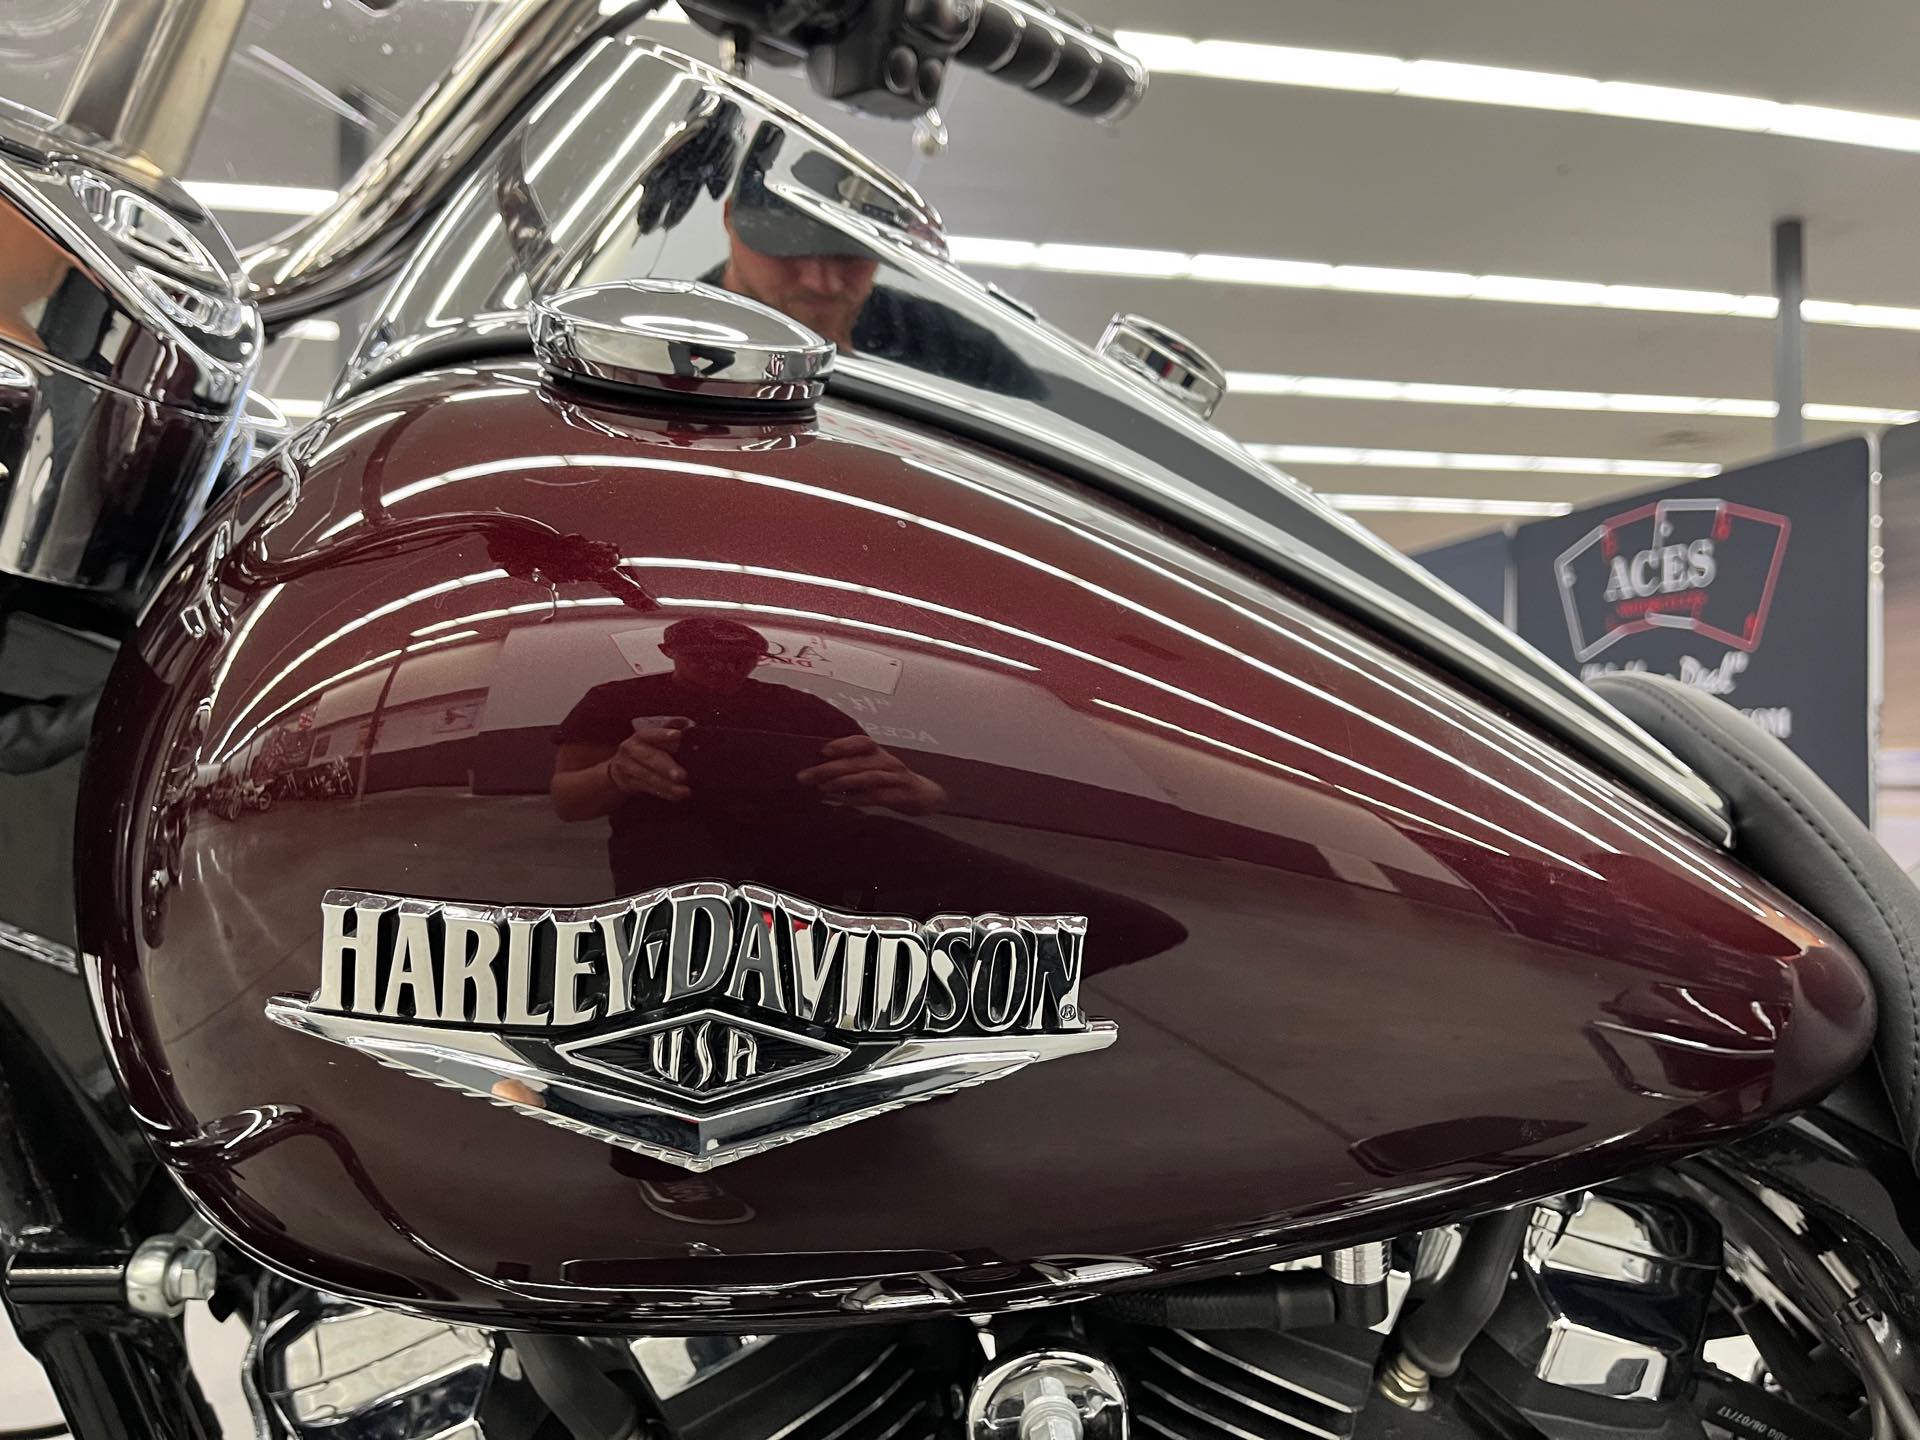 2018 Harley-Davidson Road King Base at Aces Motorcycles - Denver